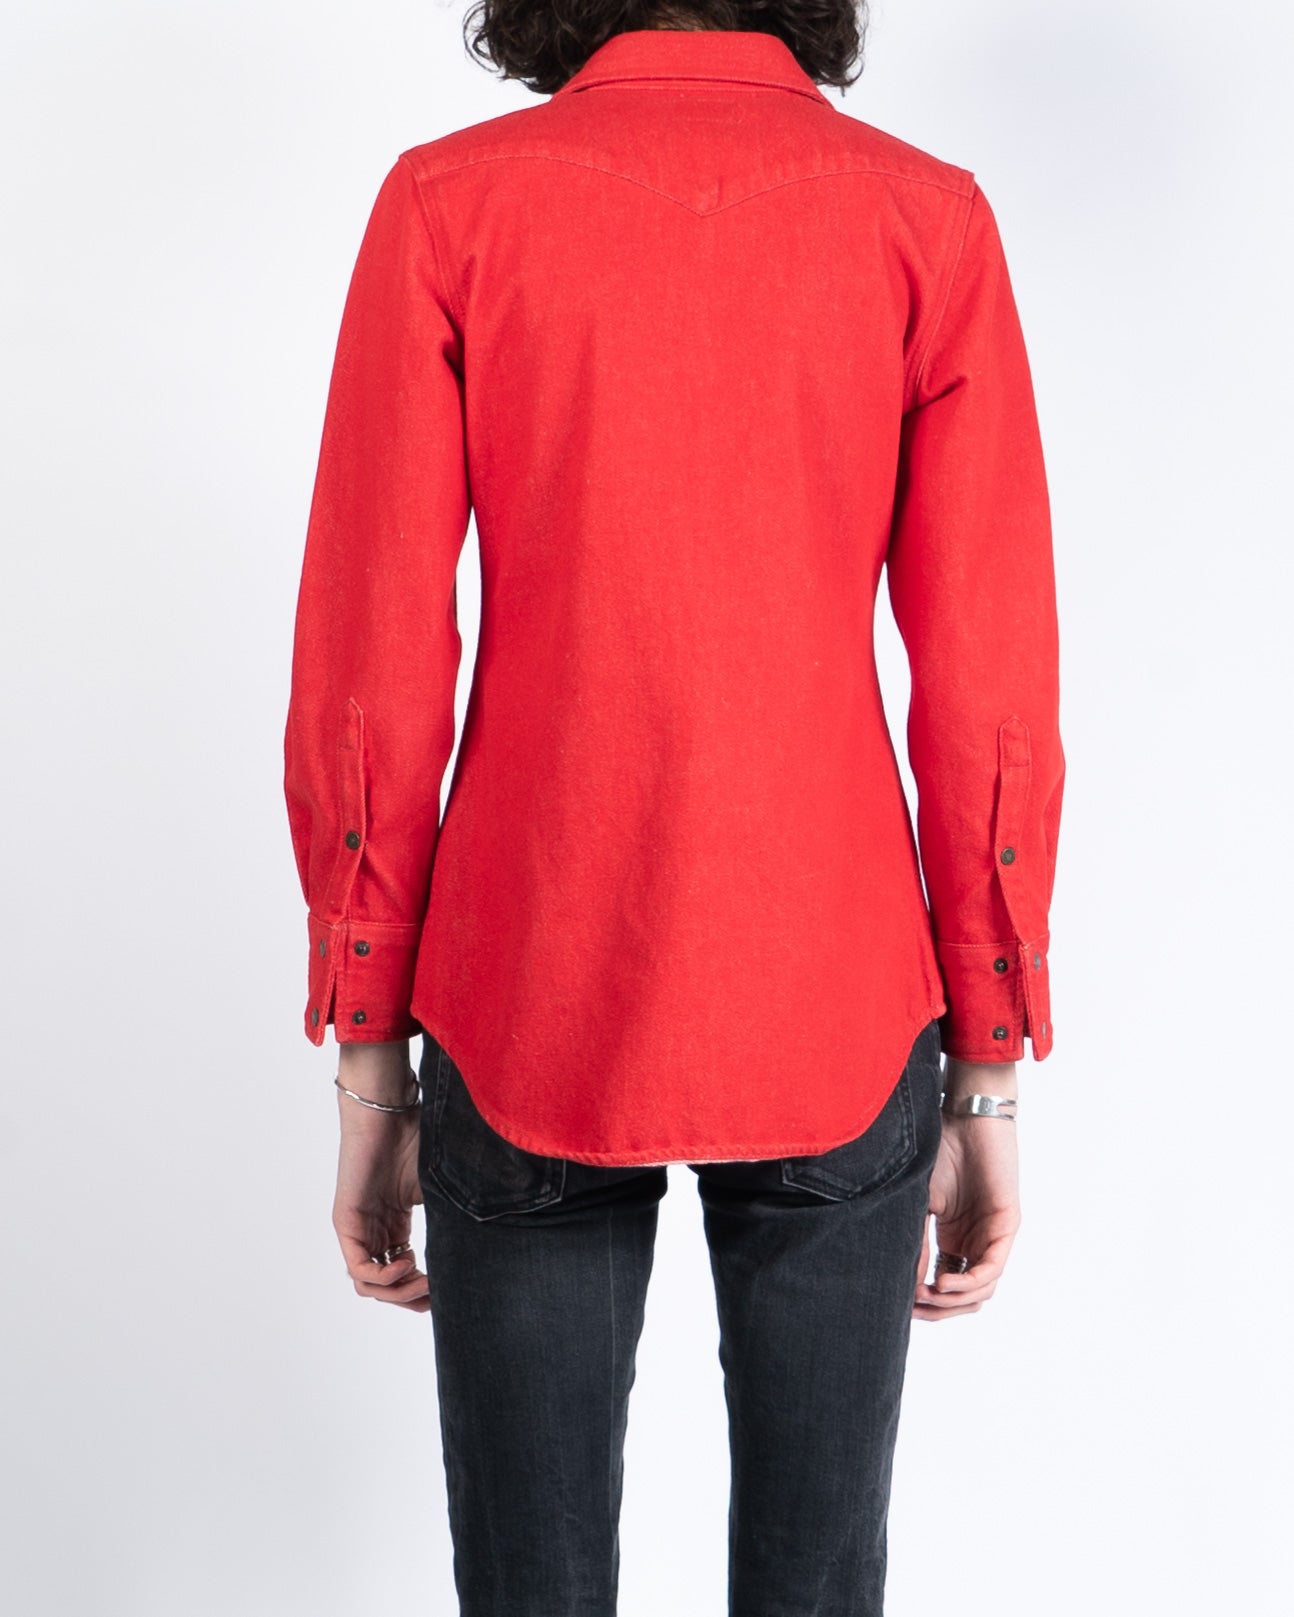 Est. Red Western Denim Shirt